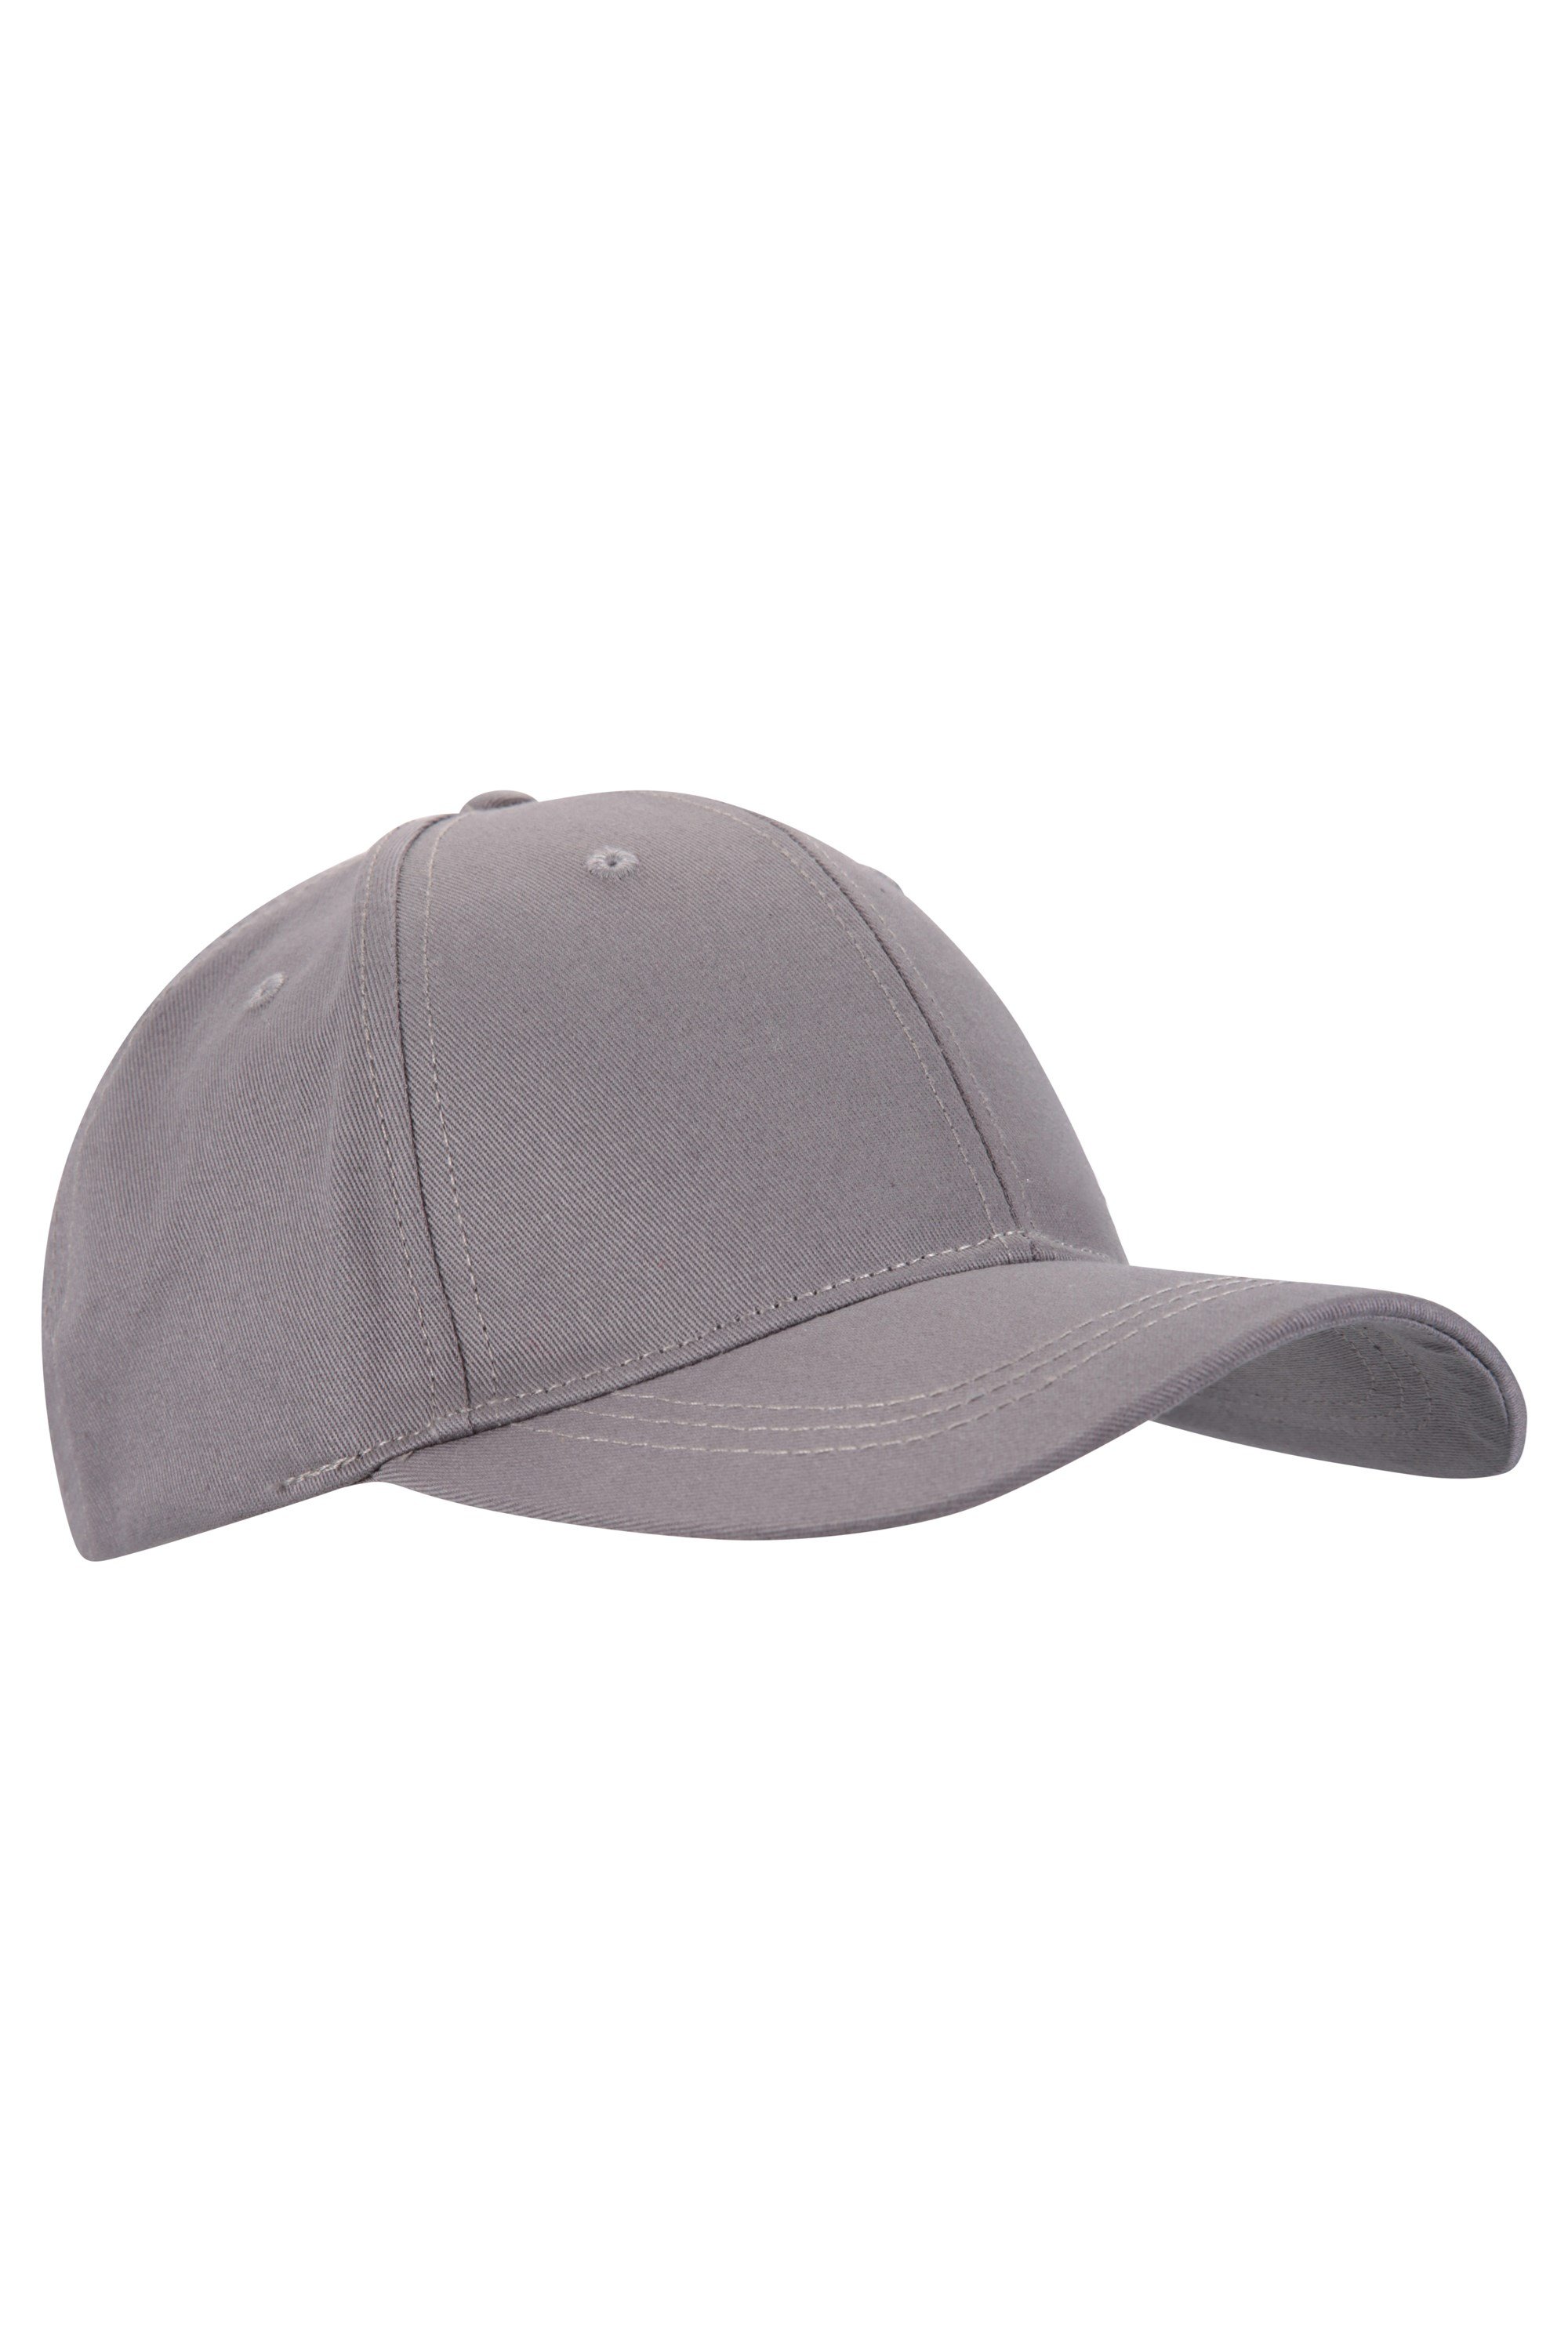 Mountain Warehouse Mens Baseball Cap - Grey | Size ONE